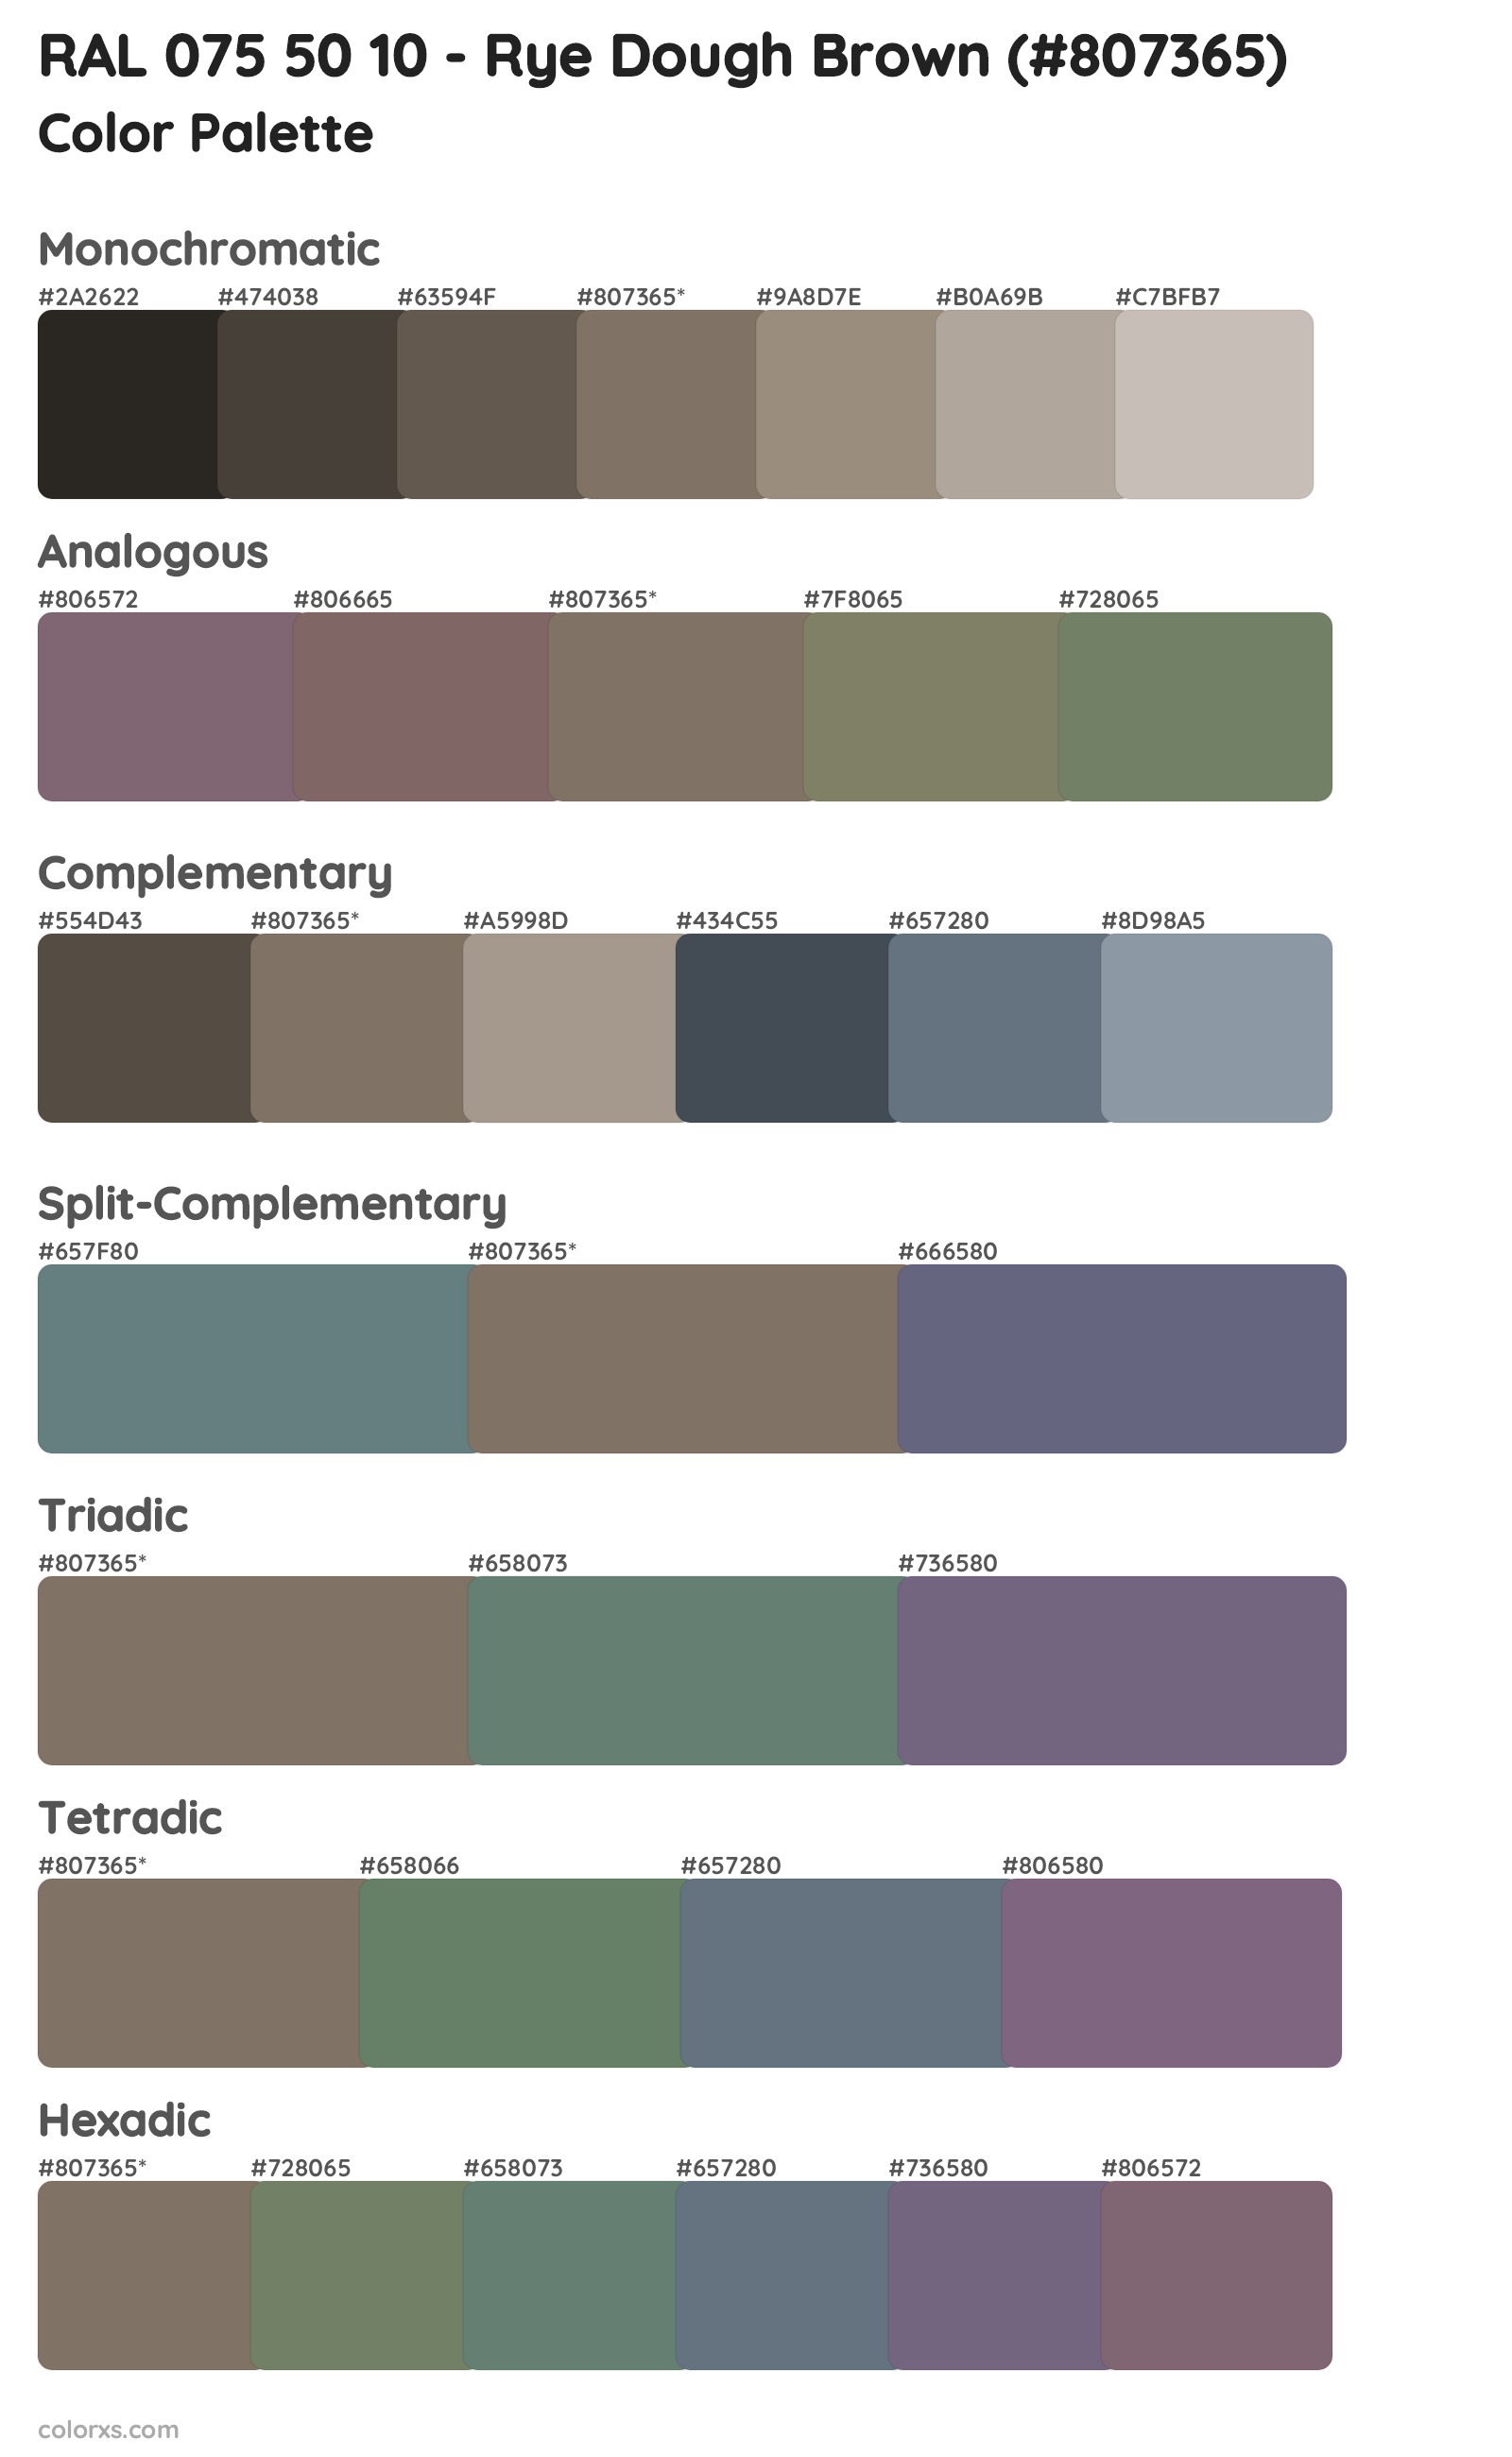 RAL 075 50 10 - Rye Dough Brown Color Scheme Palettes